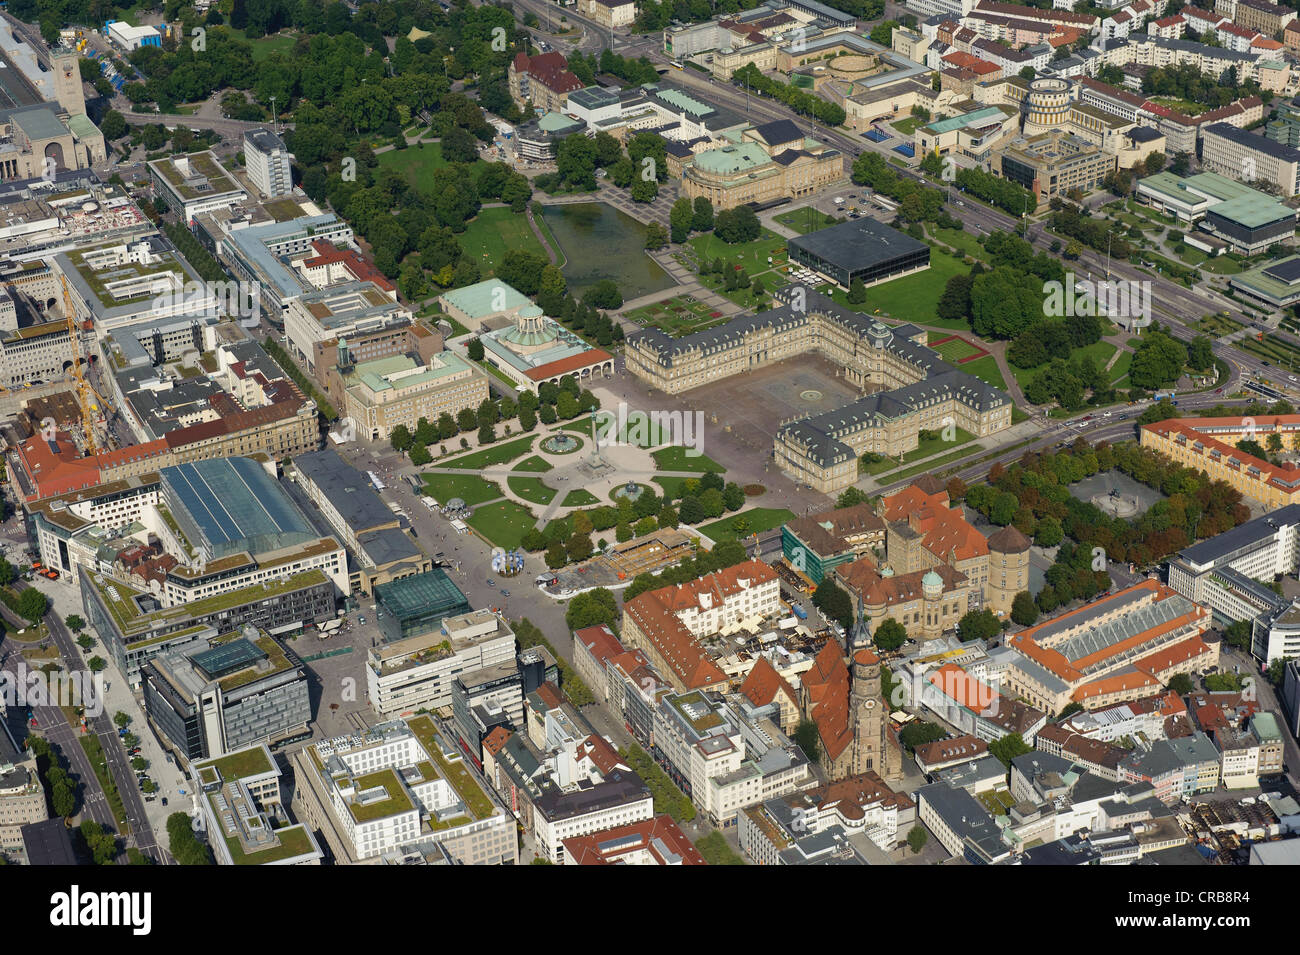 Vista aerea, centro città, Neues Schloss, New Castle, Schlossplatz square, Altes Schloss, old castle Koenigsbaupassage, Eckensee Foto Stock